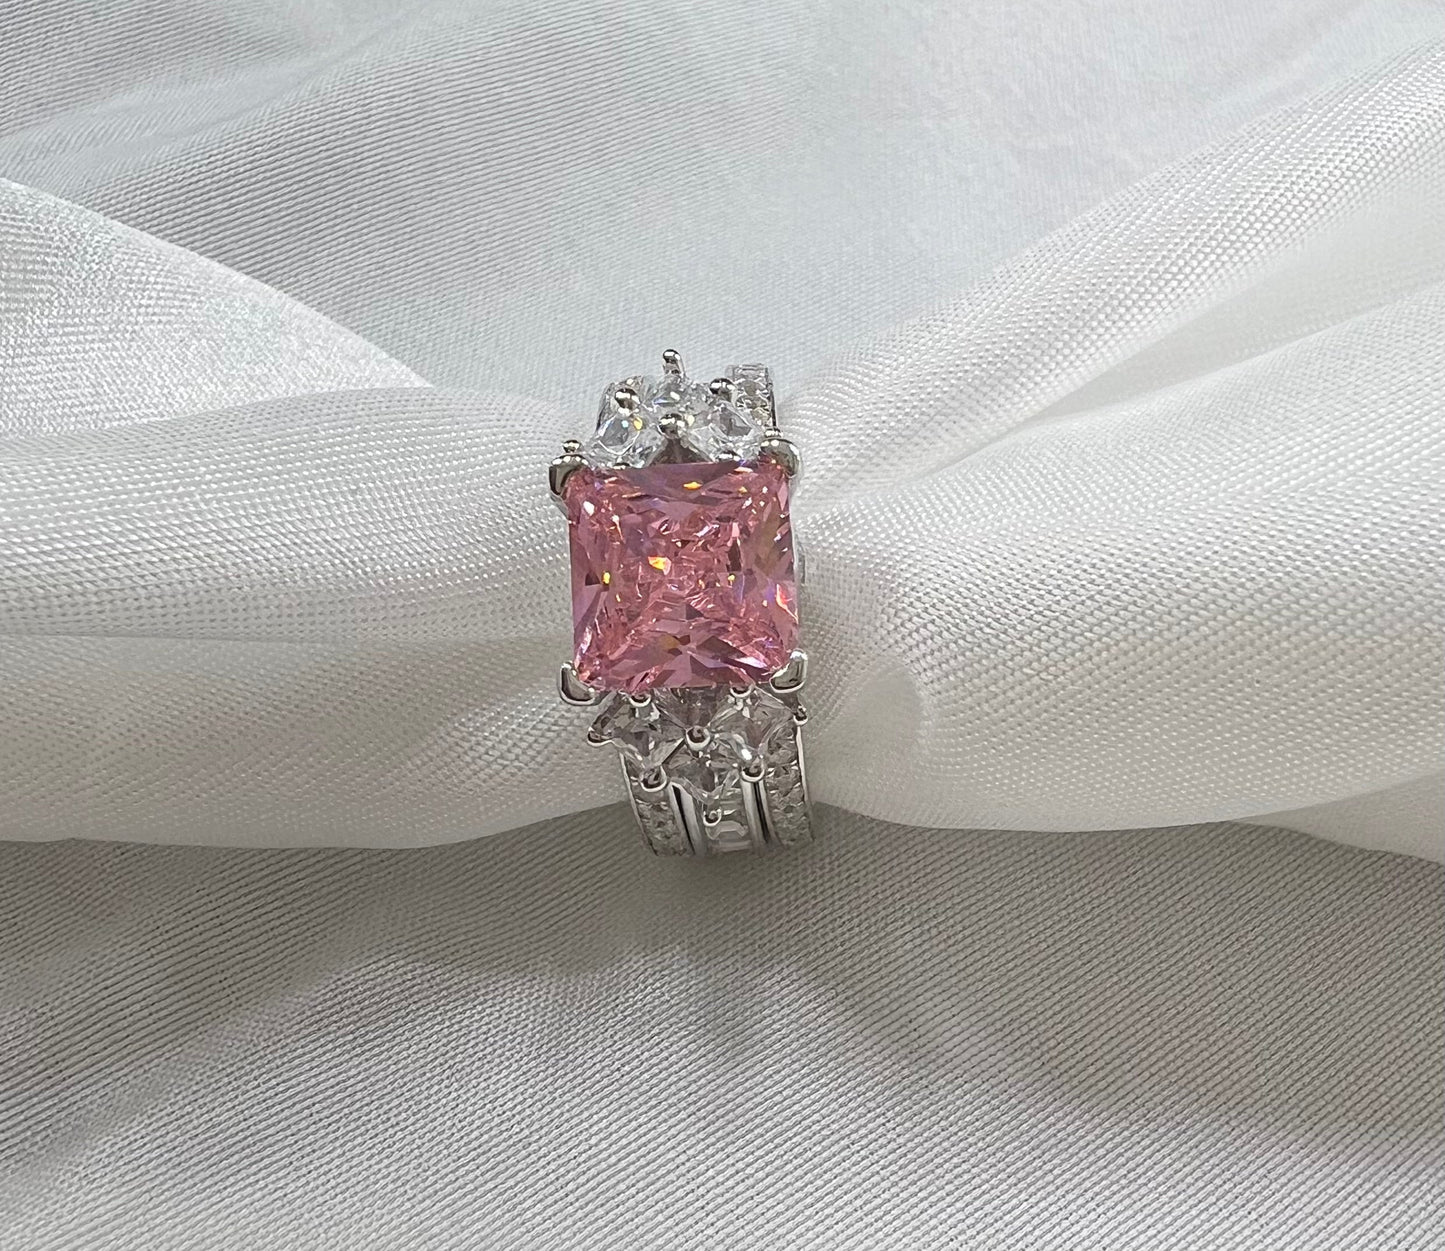 *PRE-ORDER - 925 Sterling Silver Princess Cut, Pink Diamond CZ Tri-Band Ring